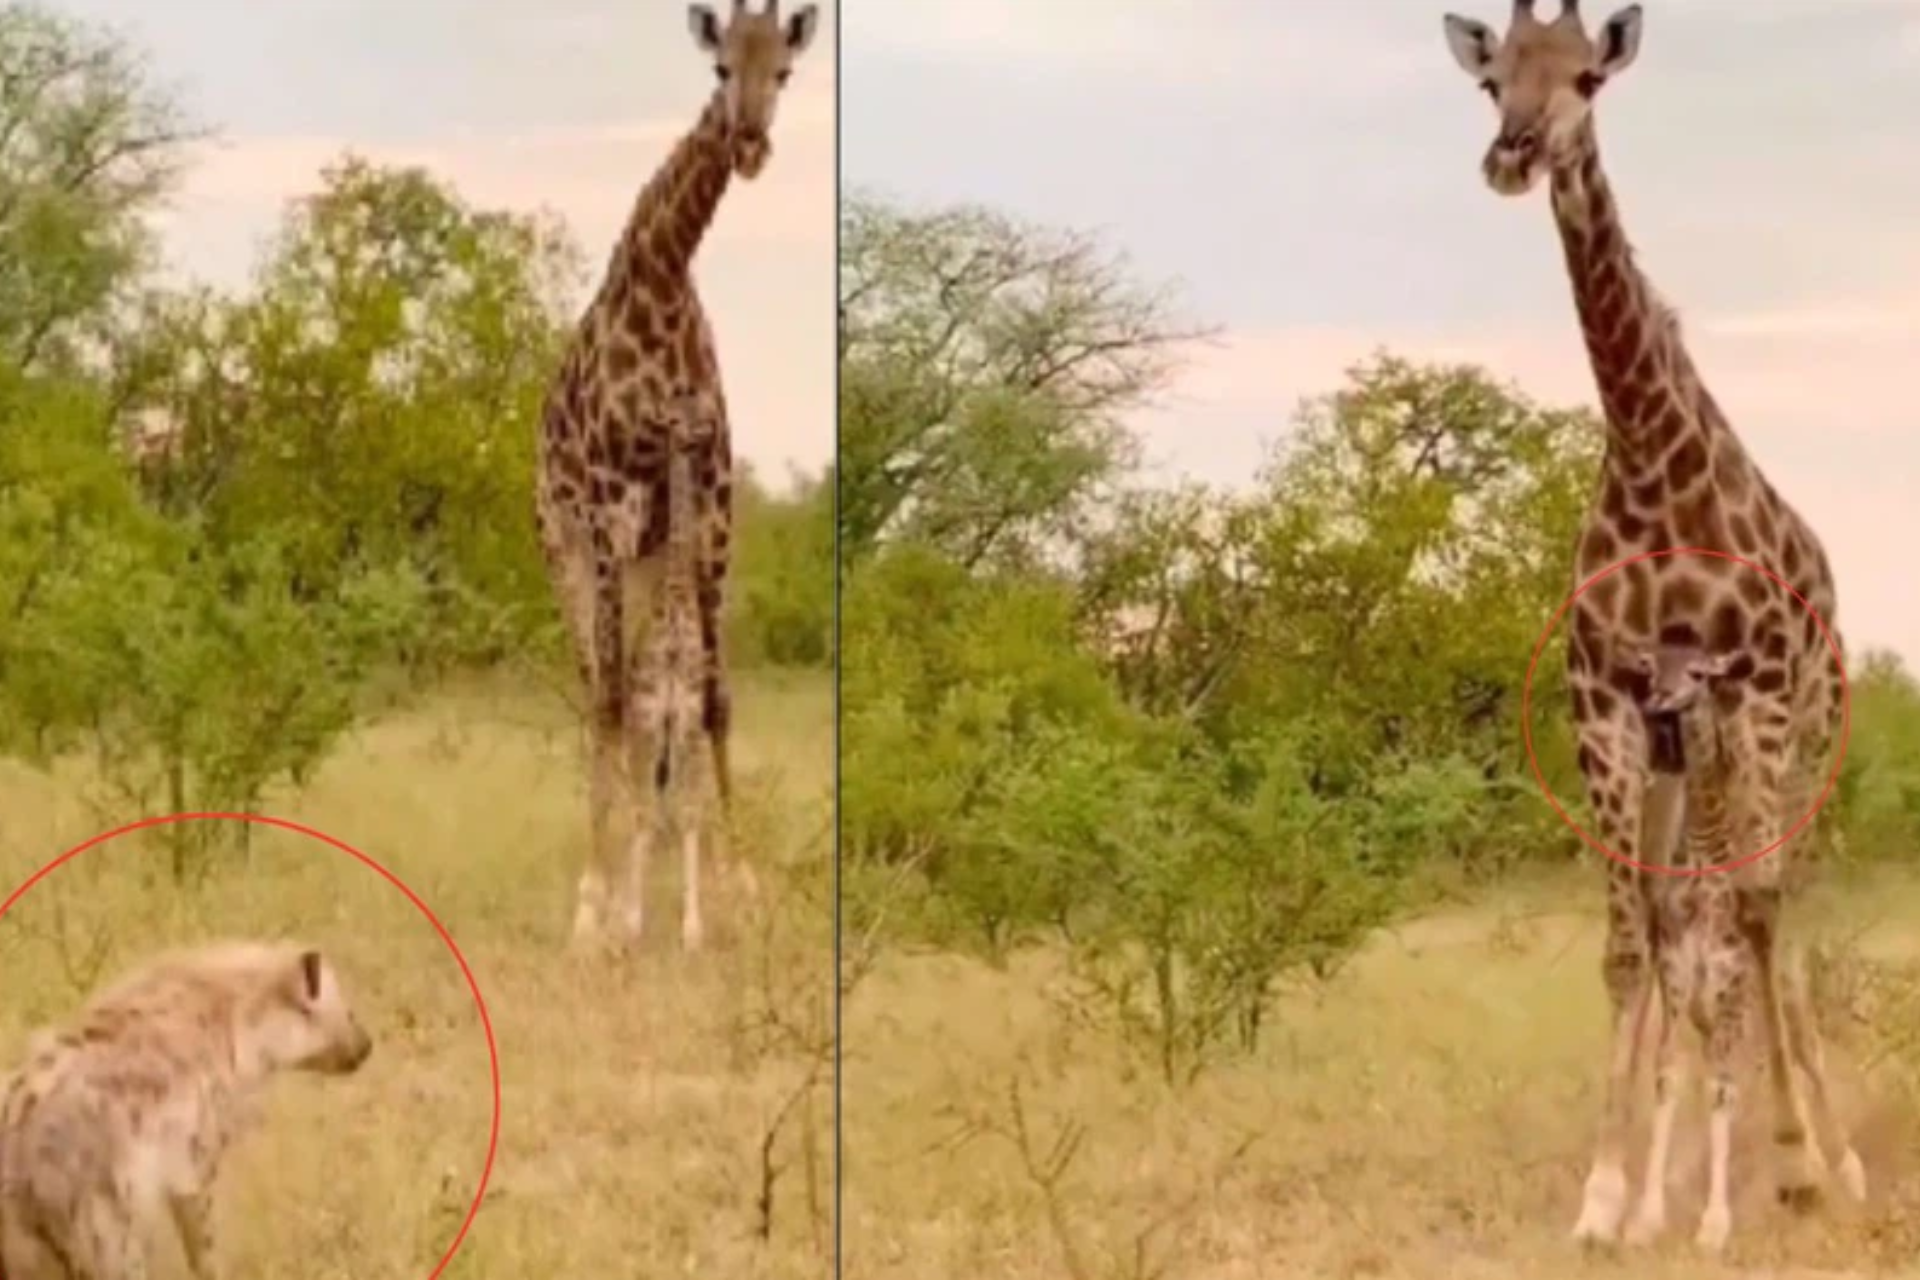 giraffe attacks couple